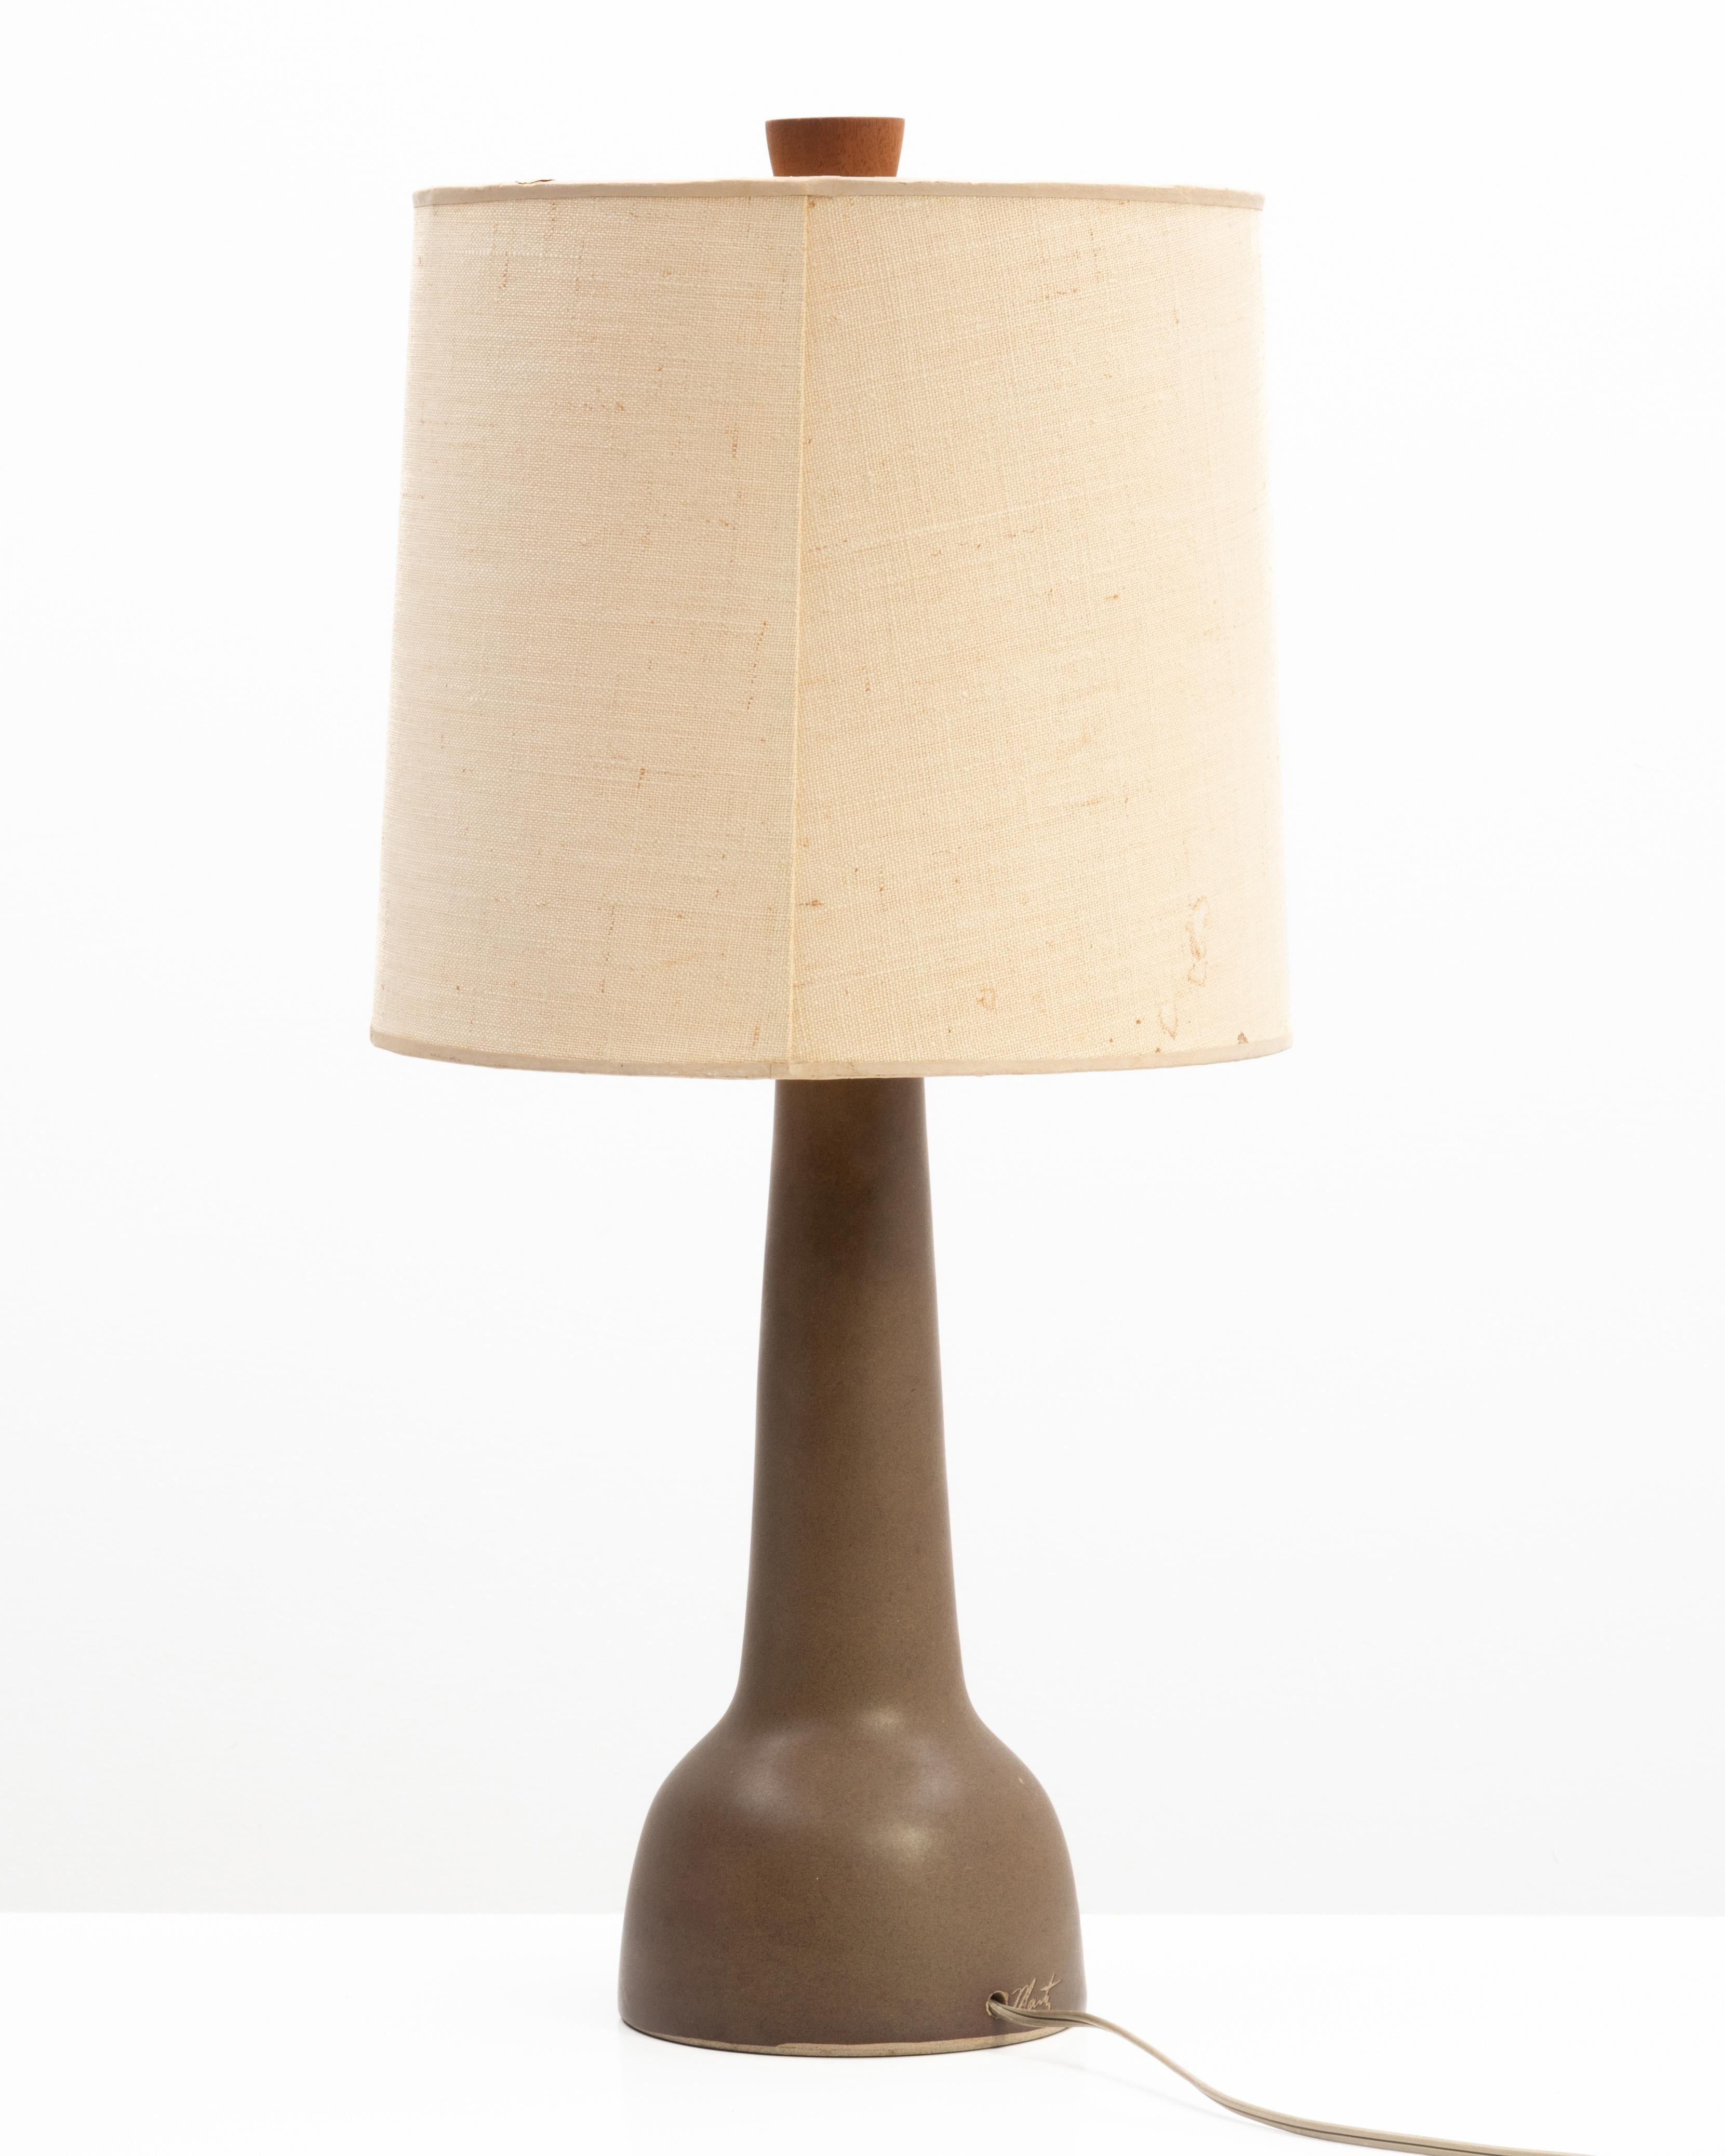 Canadian Gordon Jane Martz Marshall Studios Table Lamp Brown Speckled Original Finial For Sale